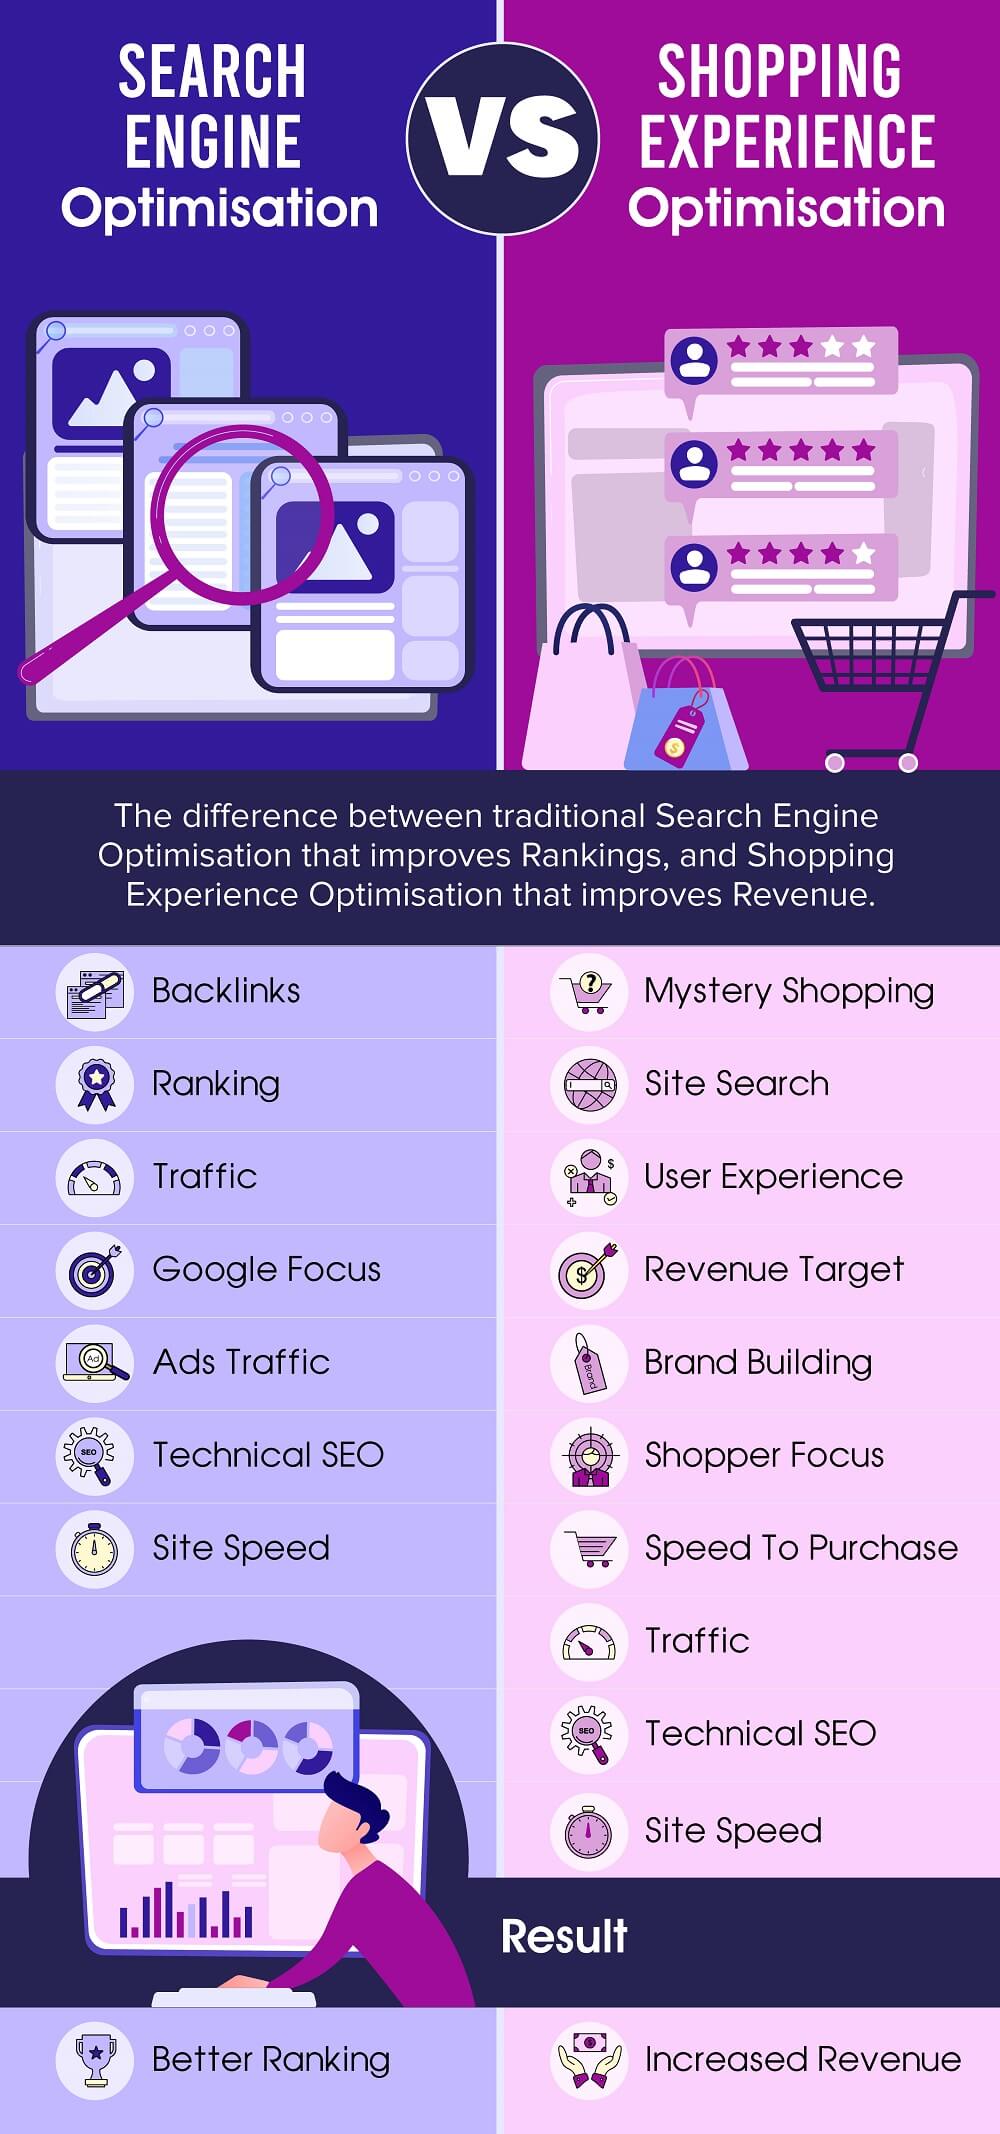 Search Engine Optimisation vs Shopping Experience Optimisation Comparison